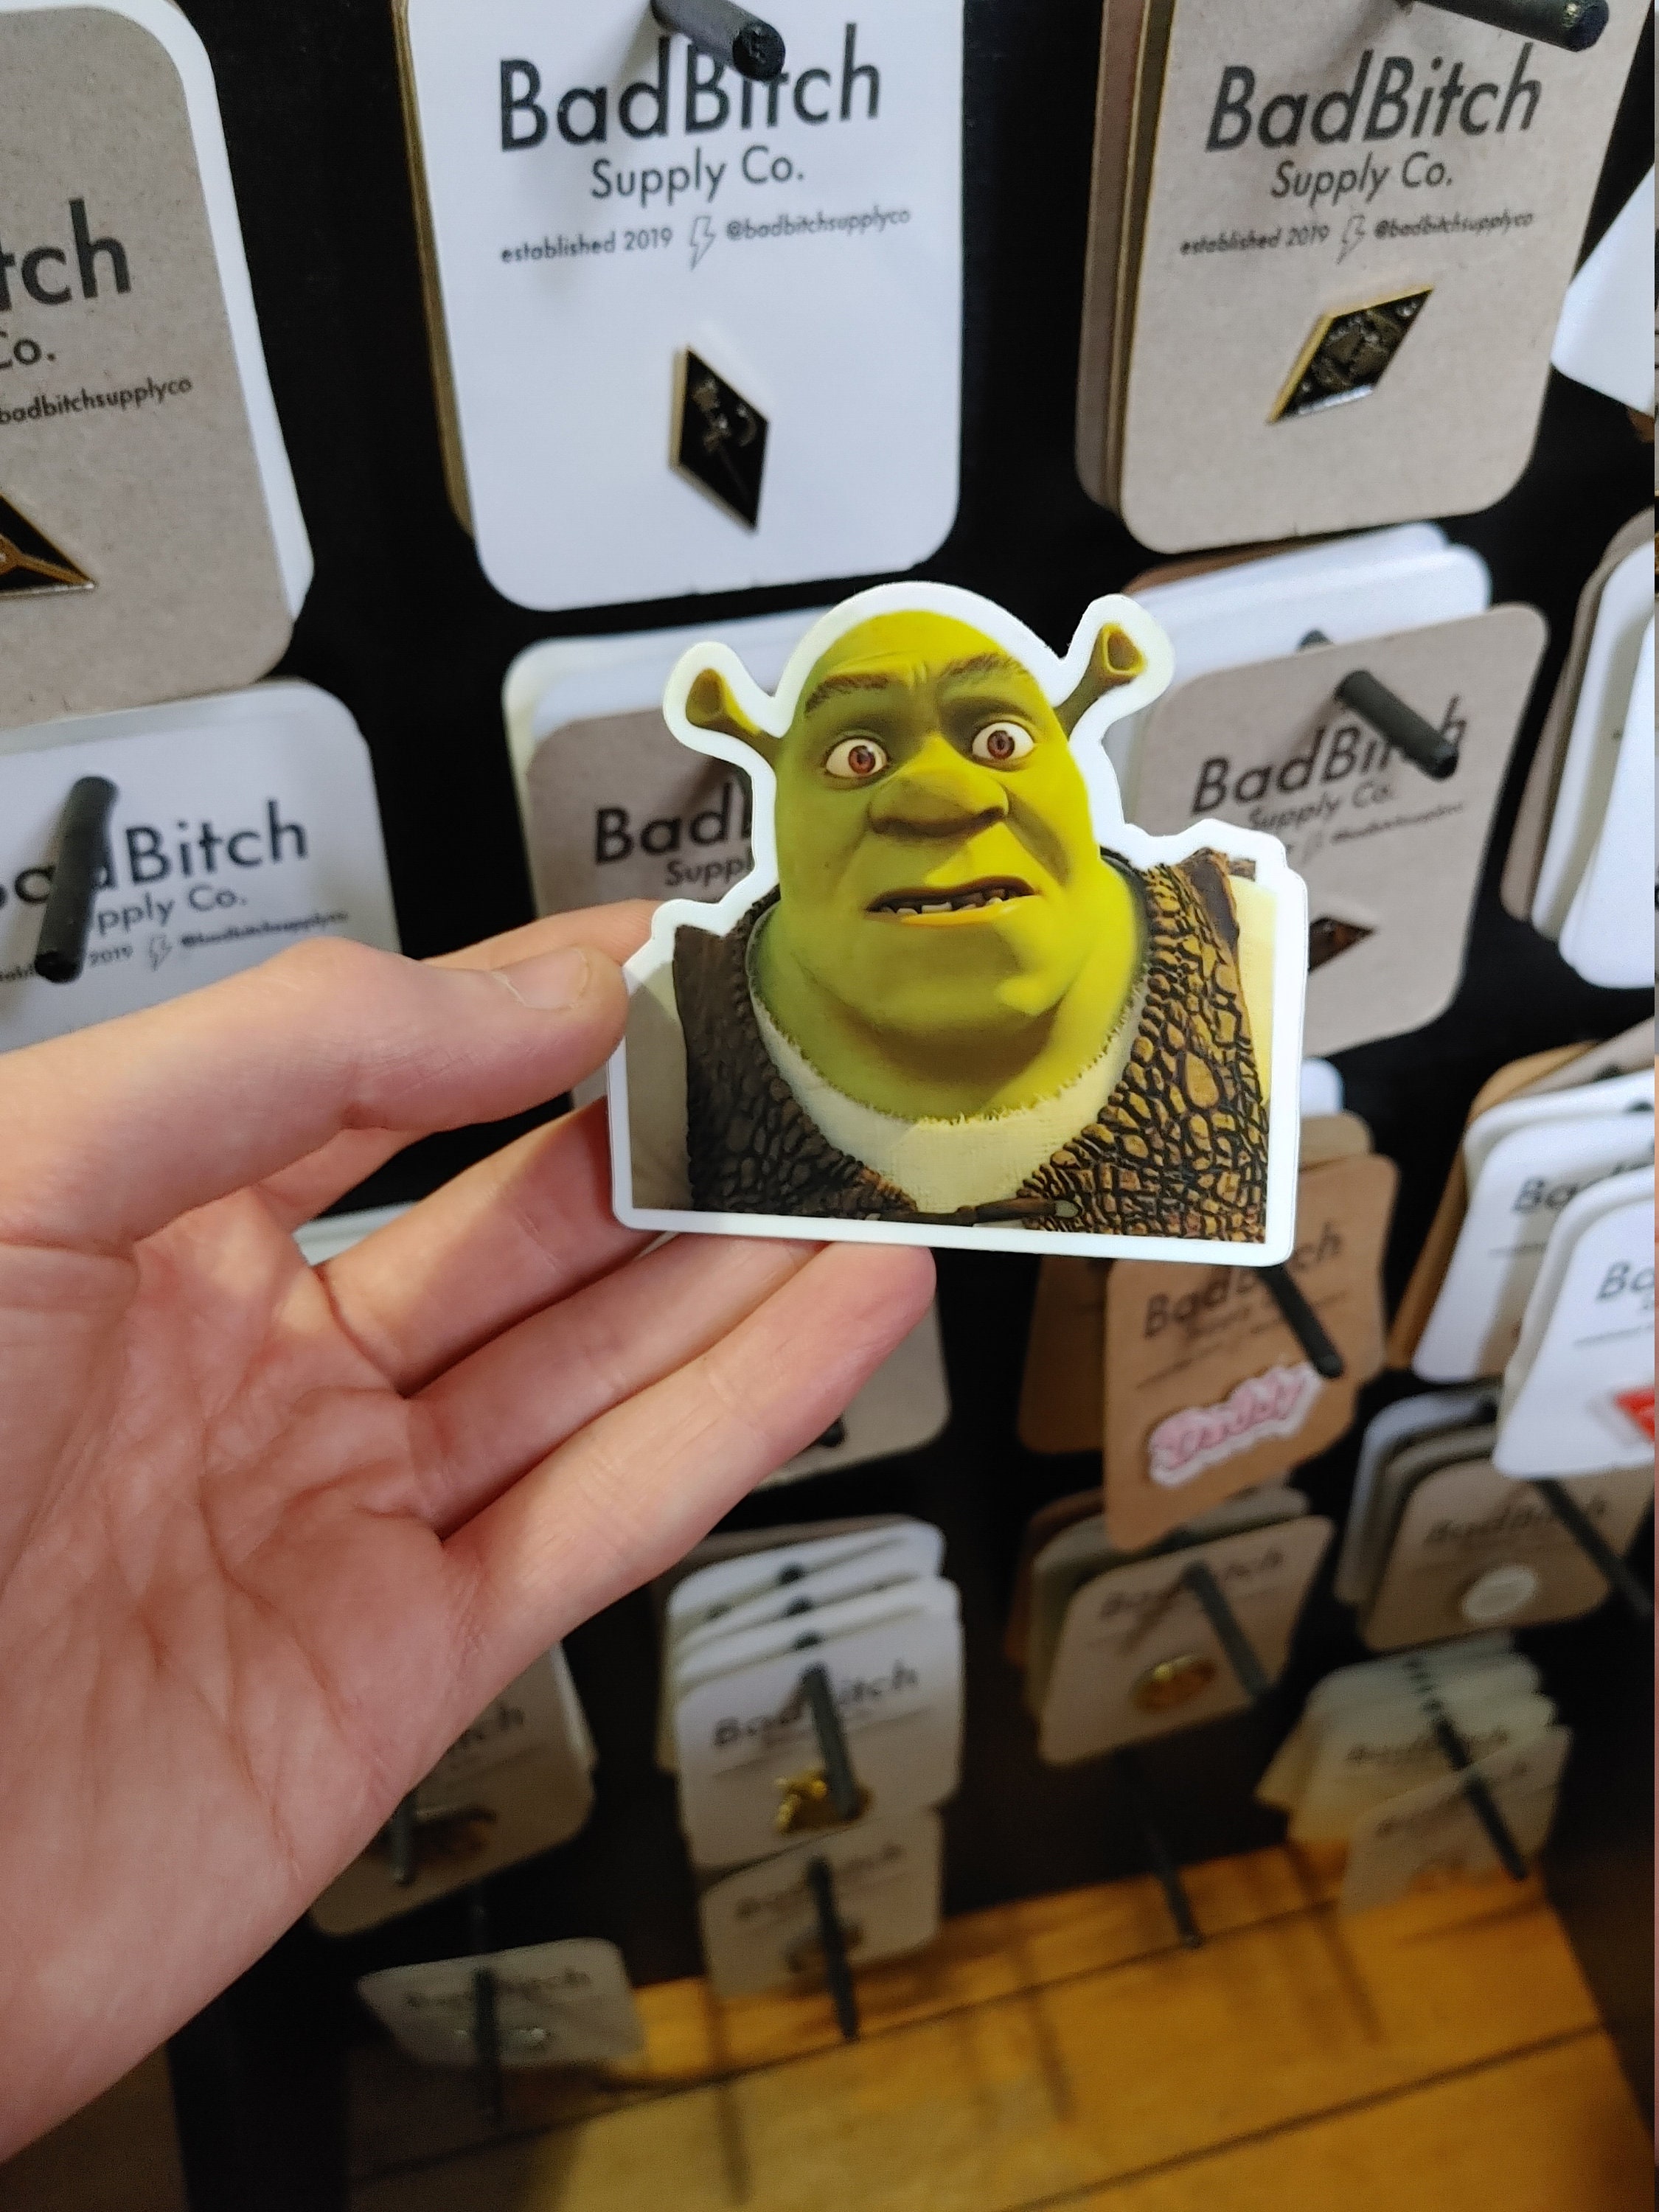 Pin on Funny Shrek memes